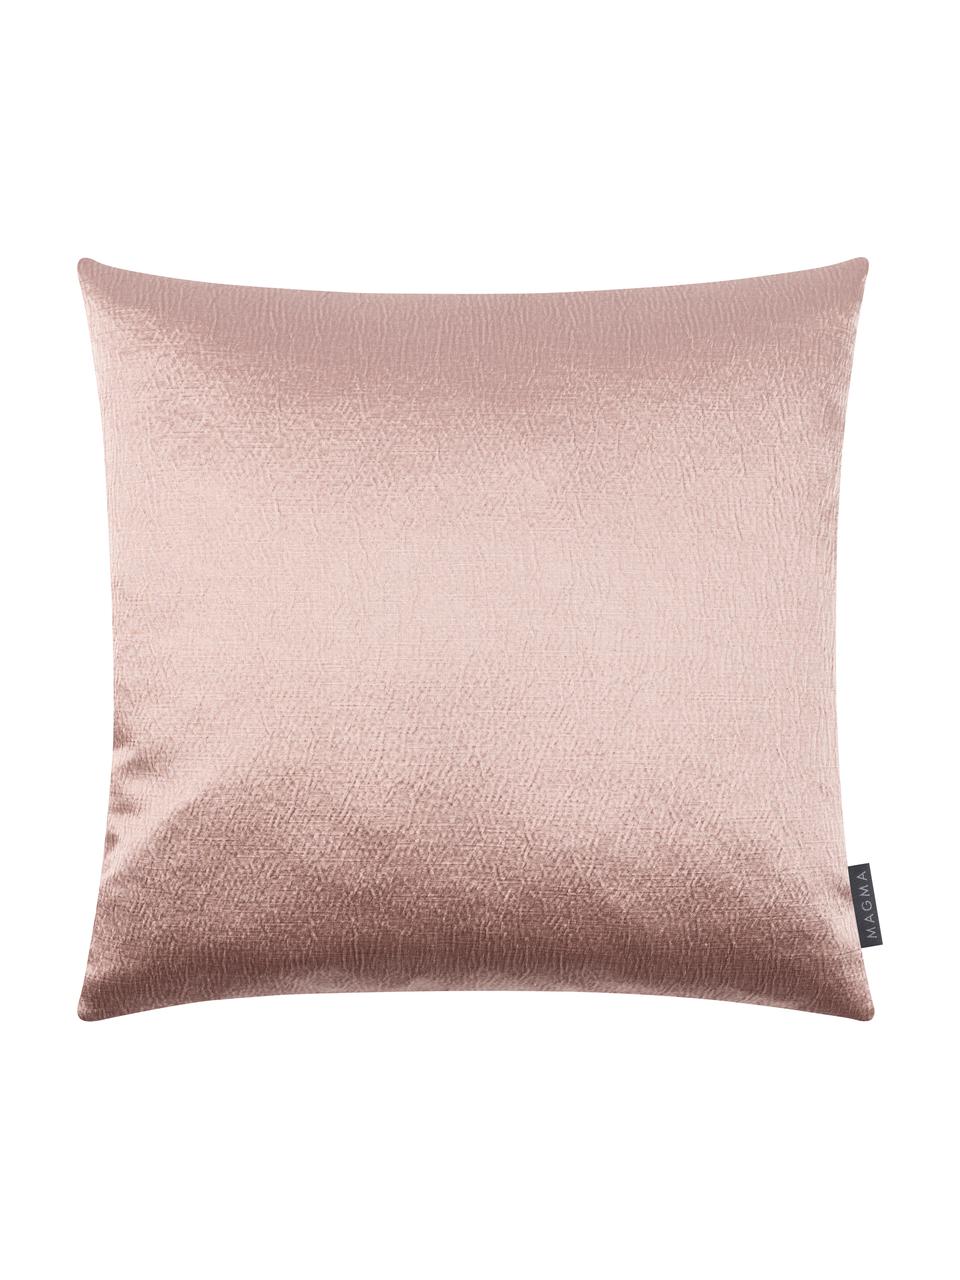 Federa arredo color rosa lucido Nilay, 56% cotone, 44% poliestere, Rosa, Larg. 50 x Lung. 50 cm